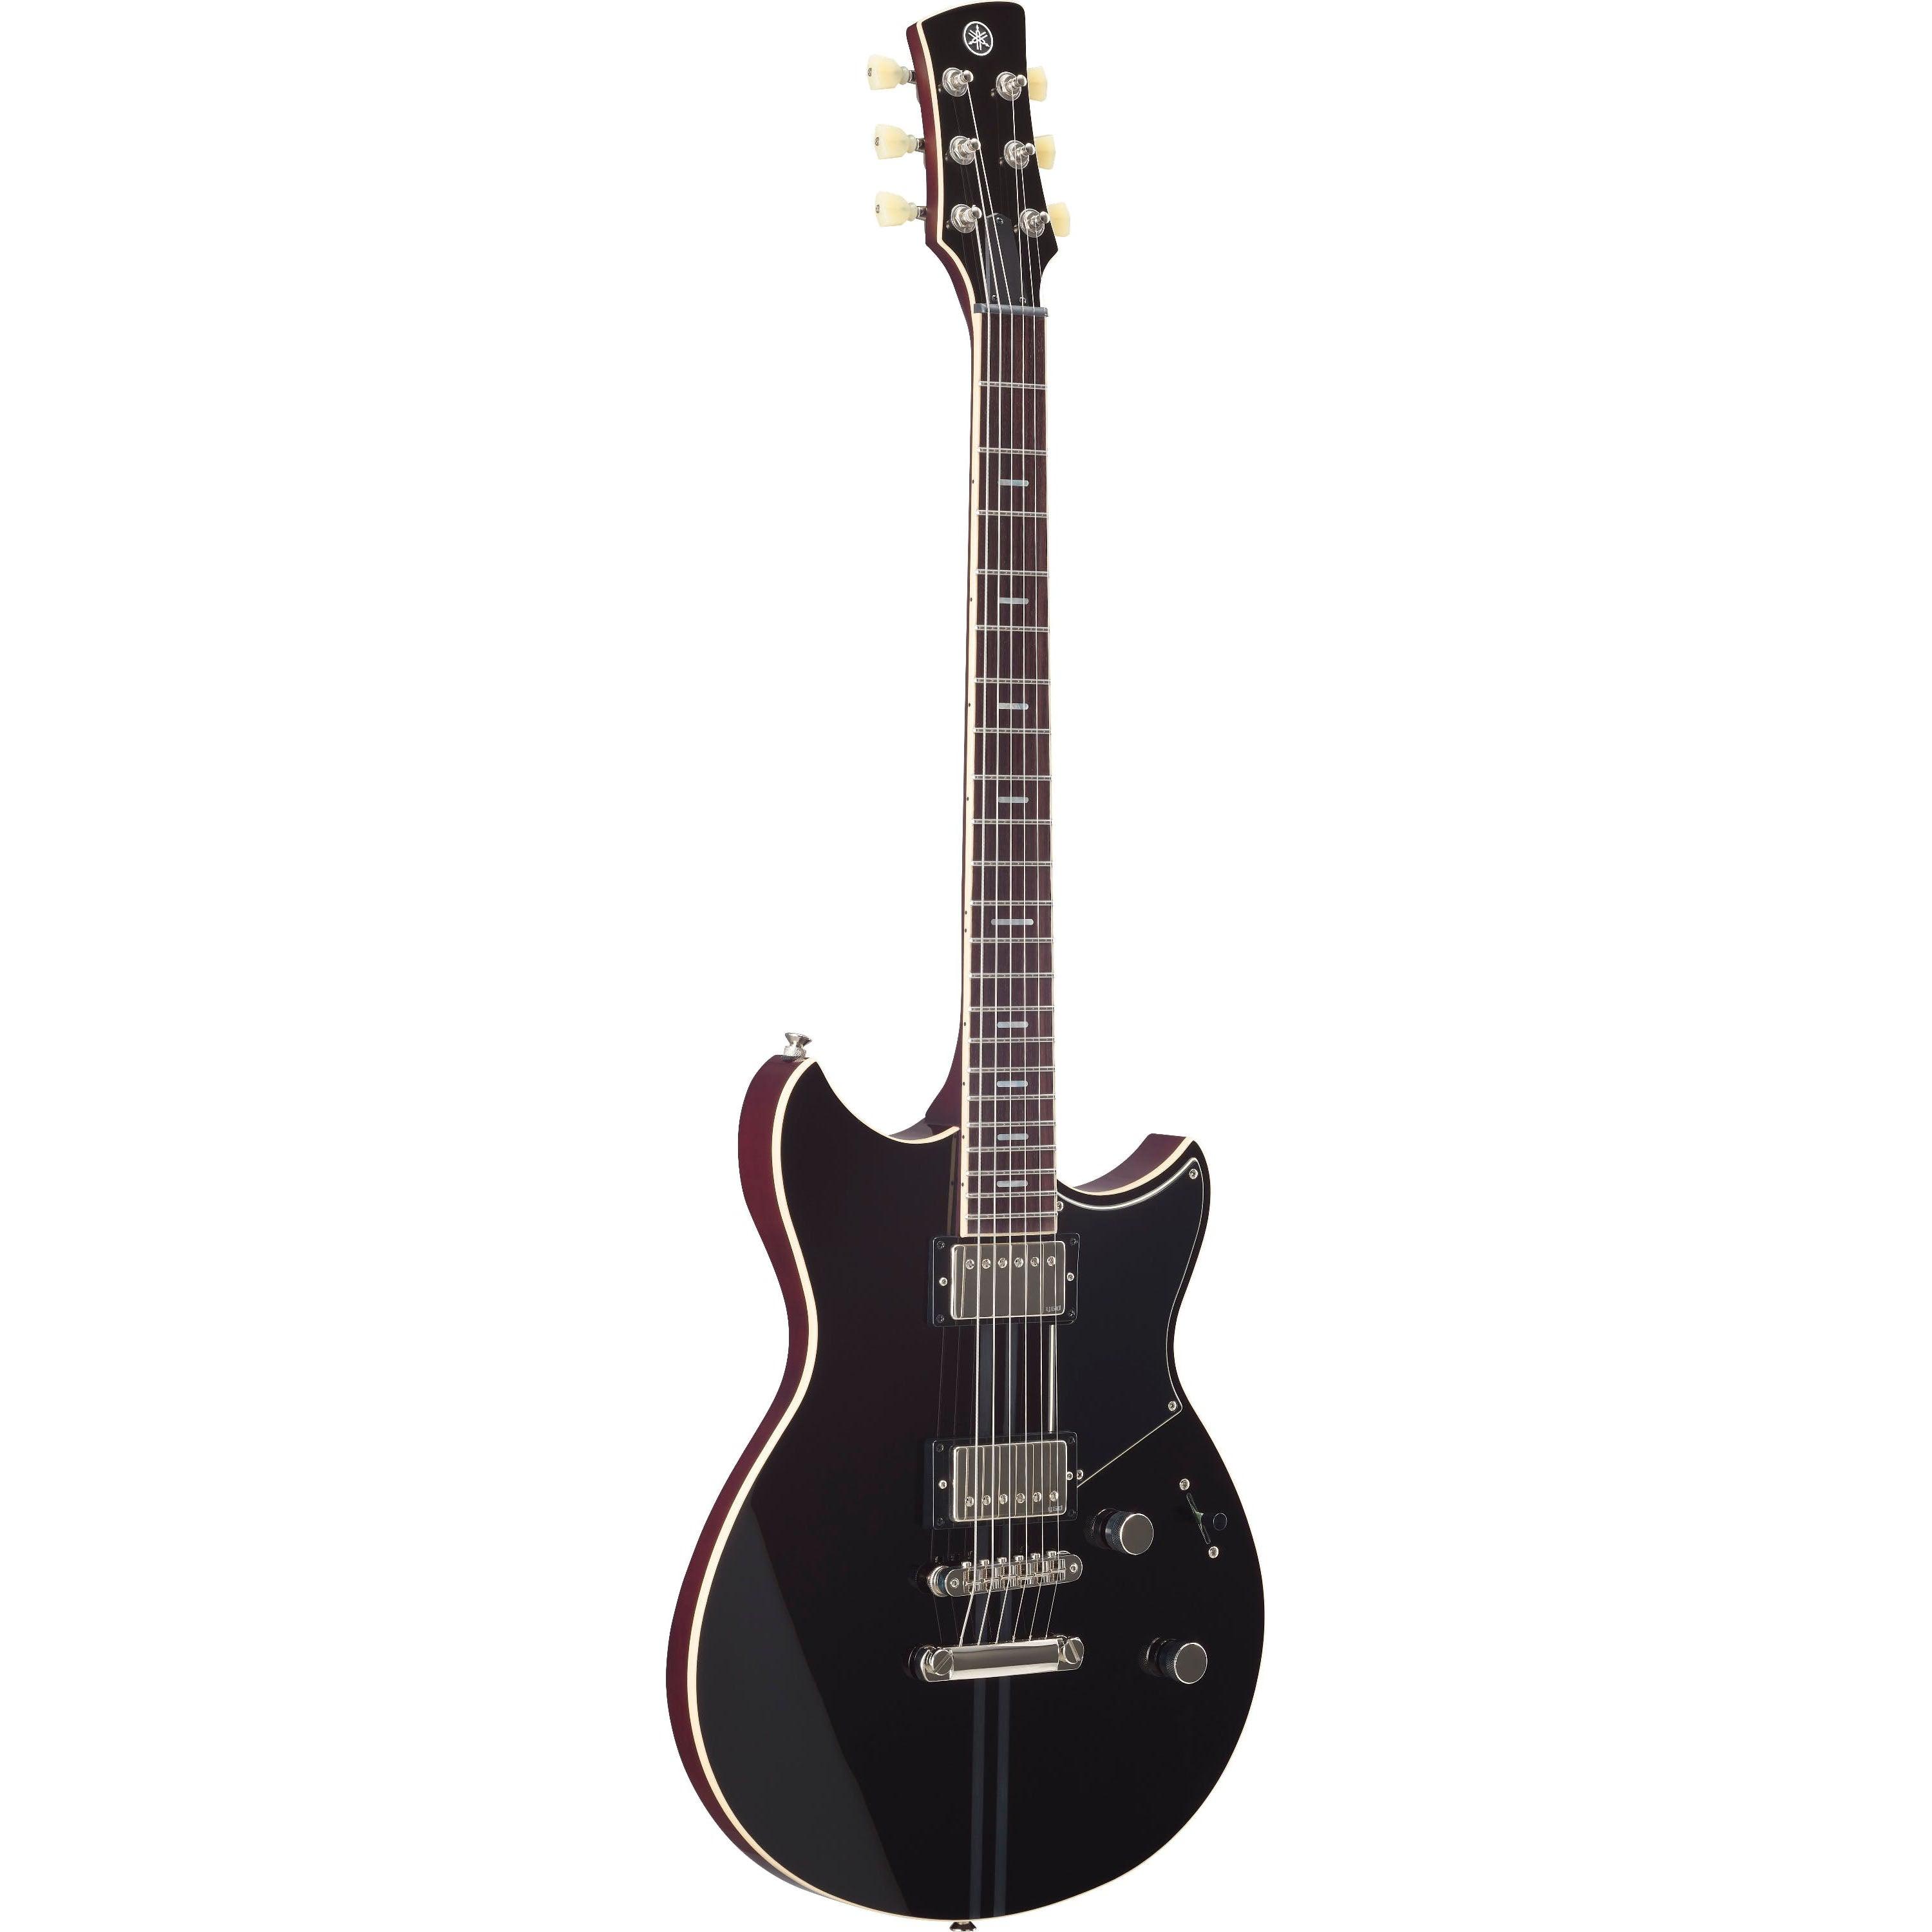 Revstar Standard Black Electric Guitar - Guitars - Electric by Yamaha at Muso's Stuff